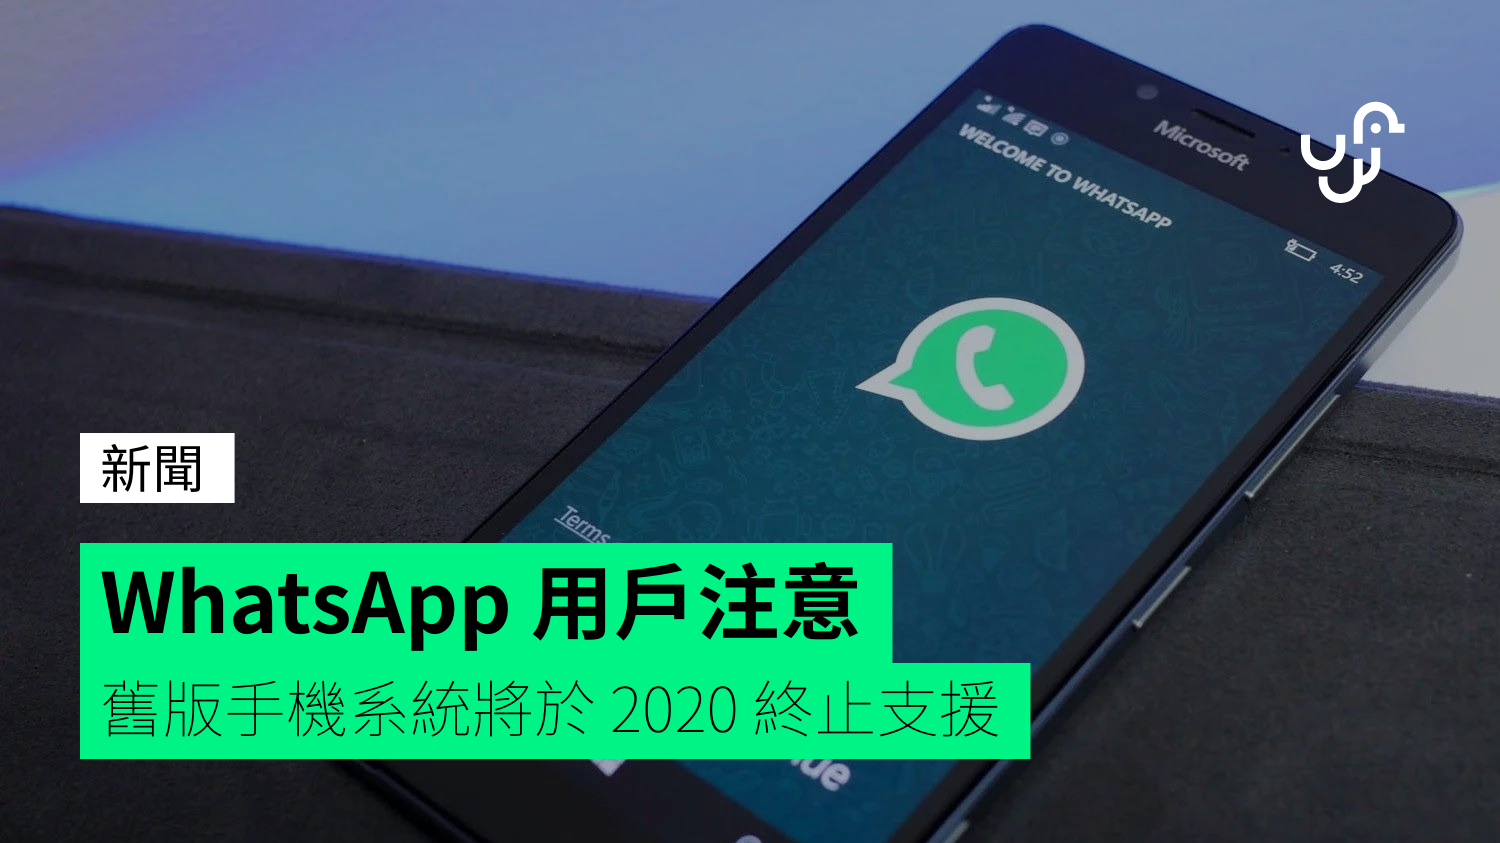 Whatsapp 終止支援windows 舊版android 手機 香港unwire Hk